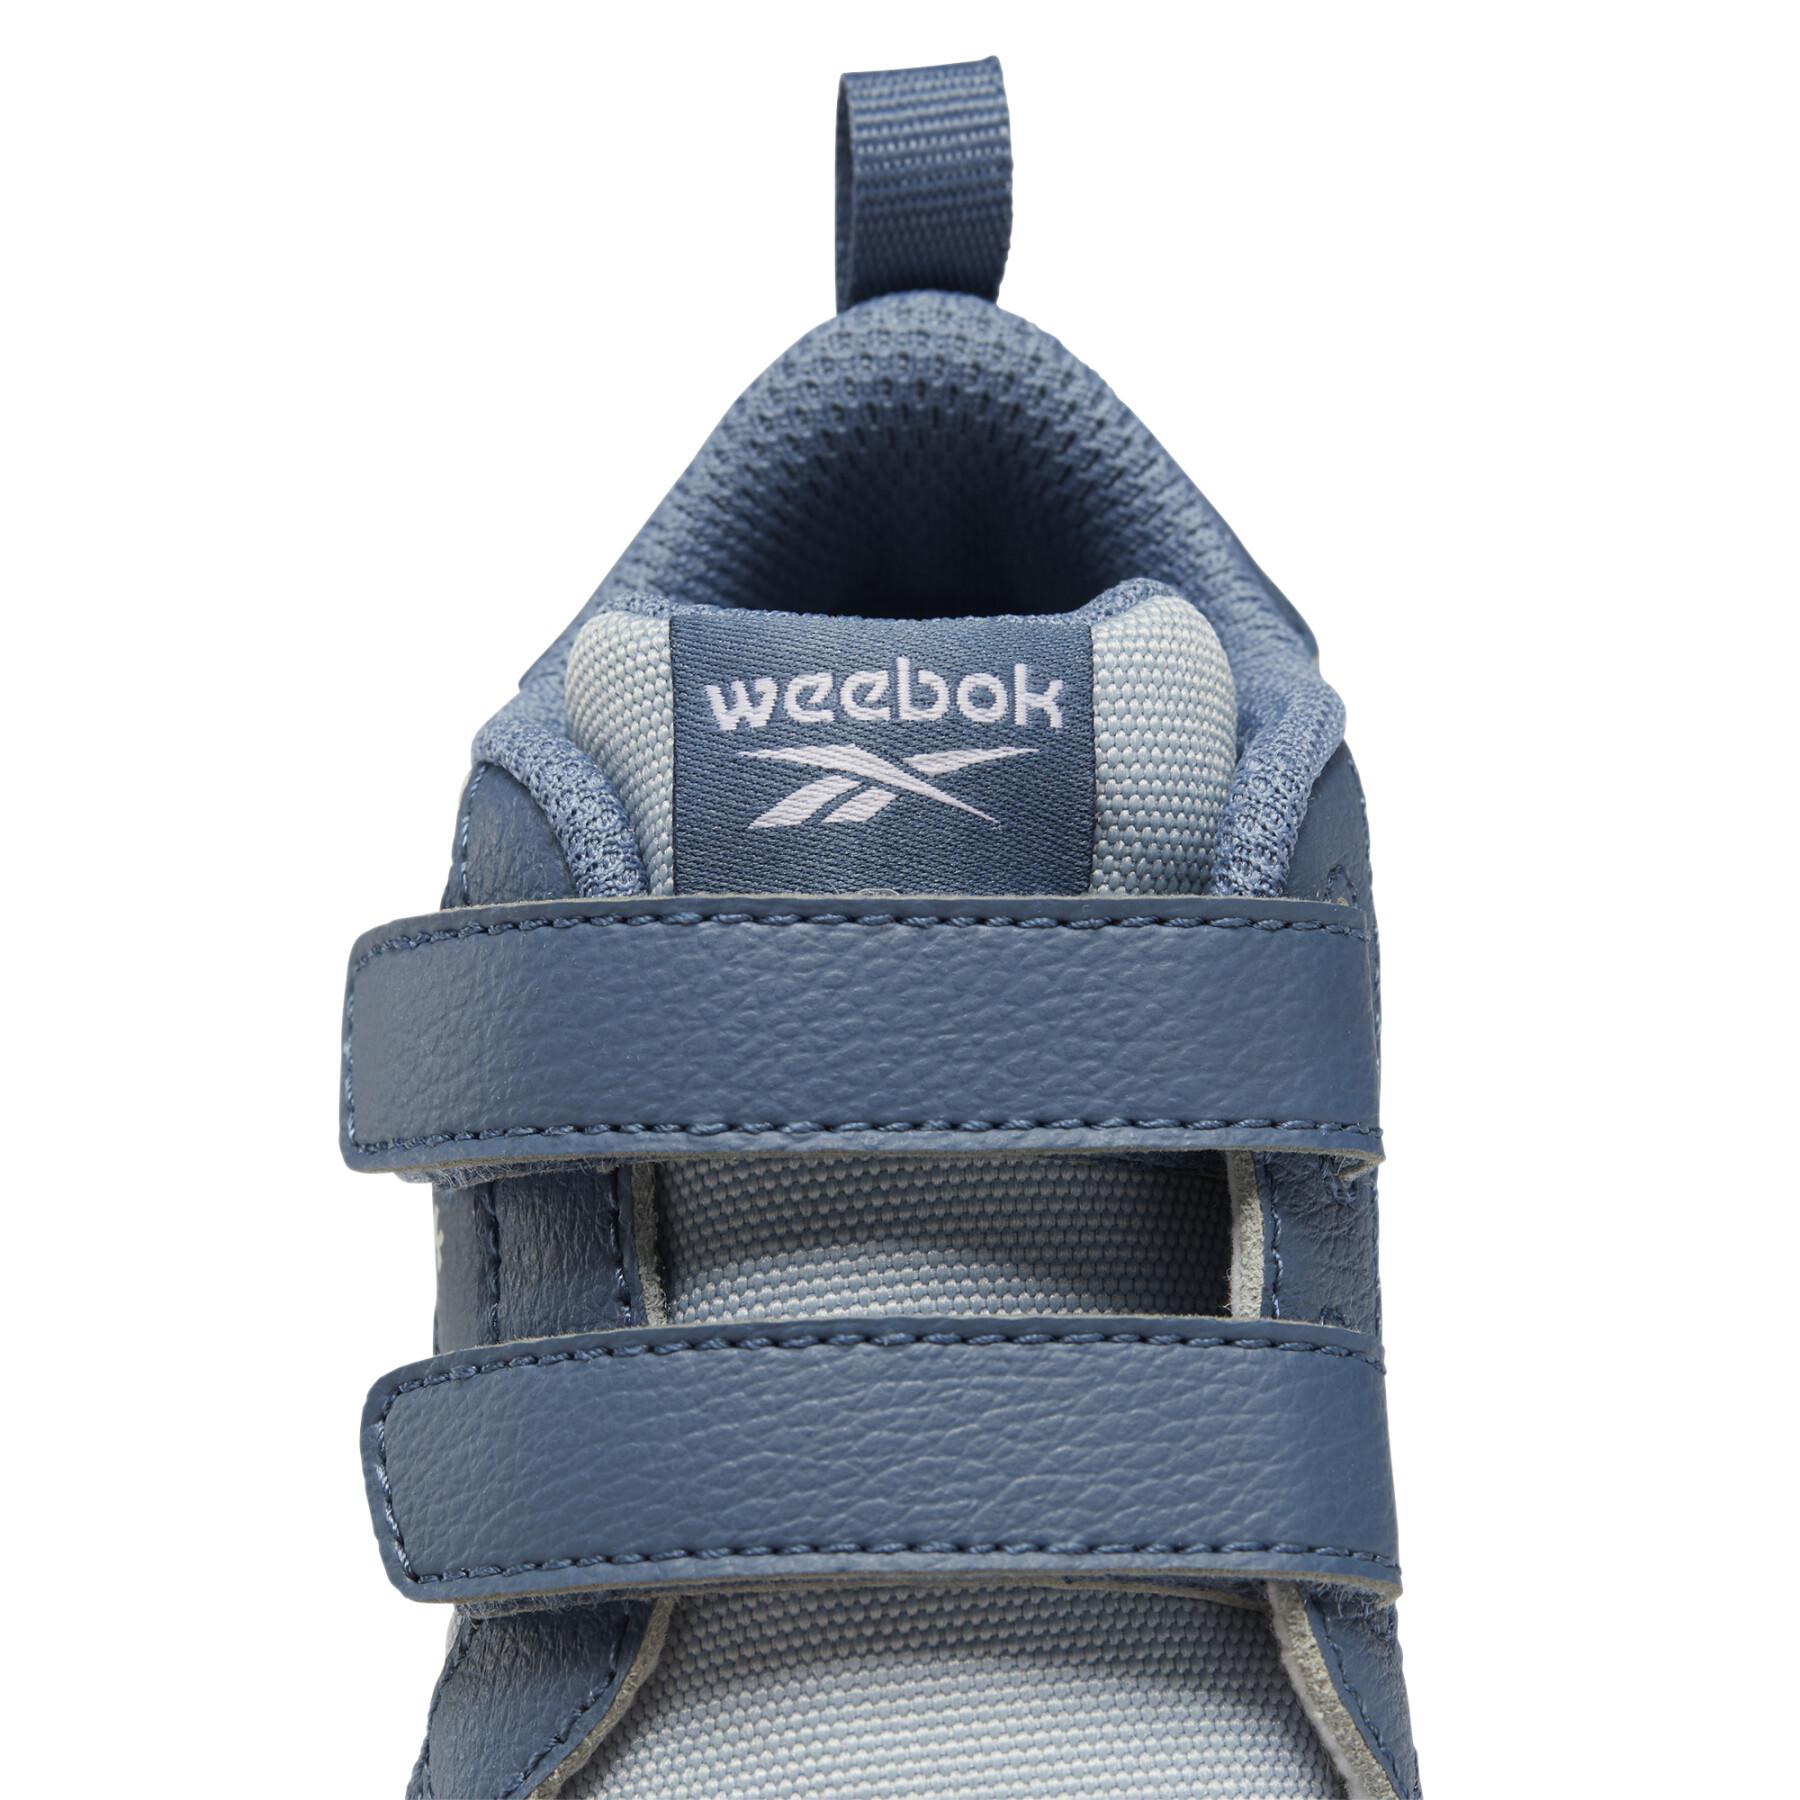 Scarpe da ginnastica per bambini Reebok Weebok Clasp Low